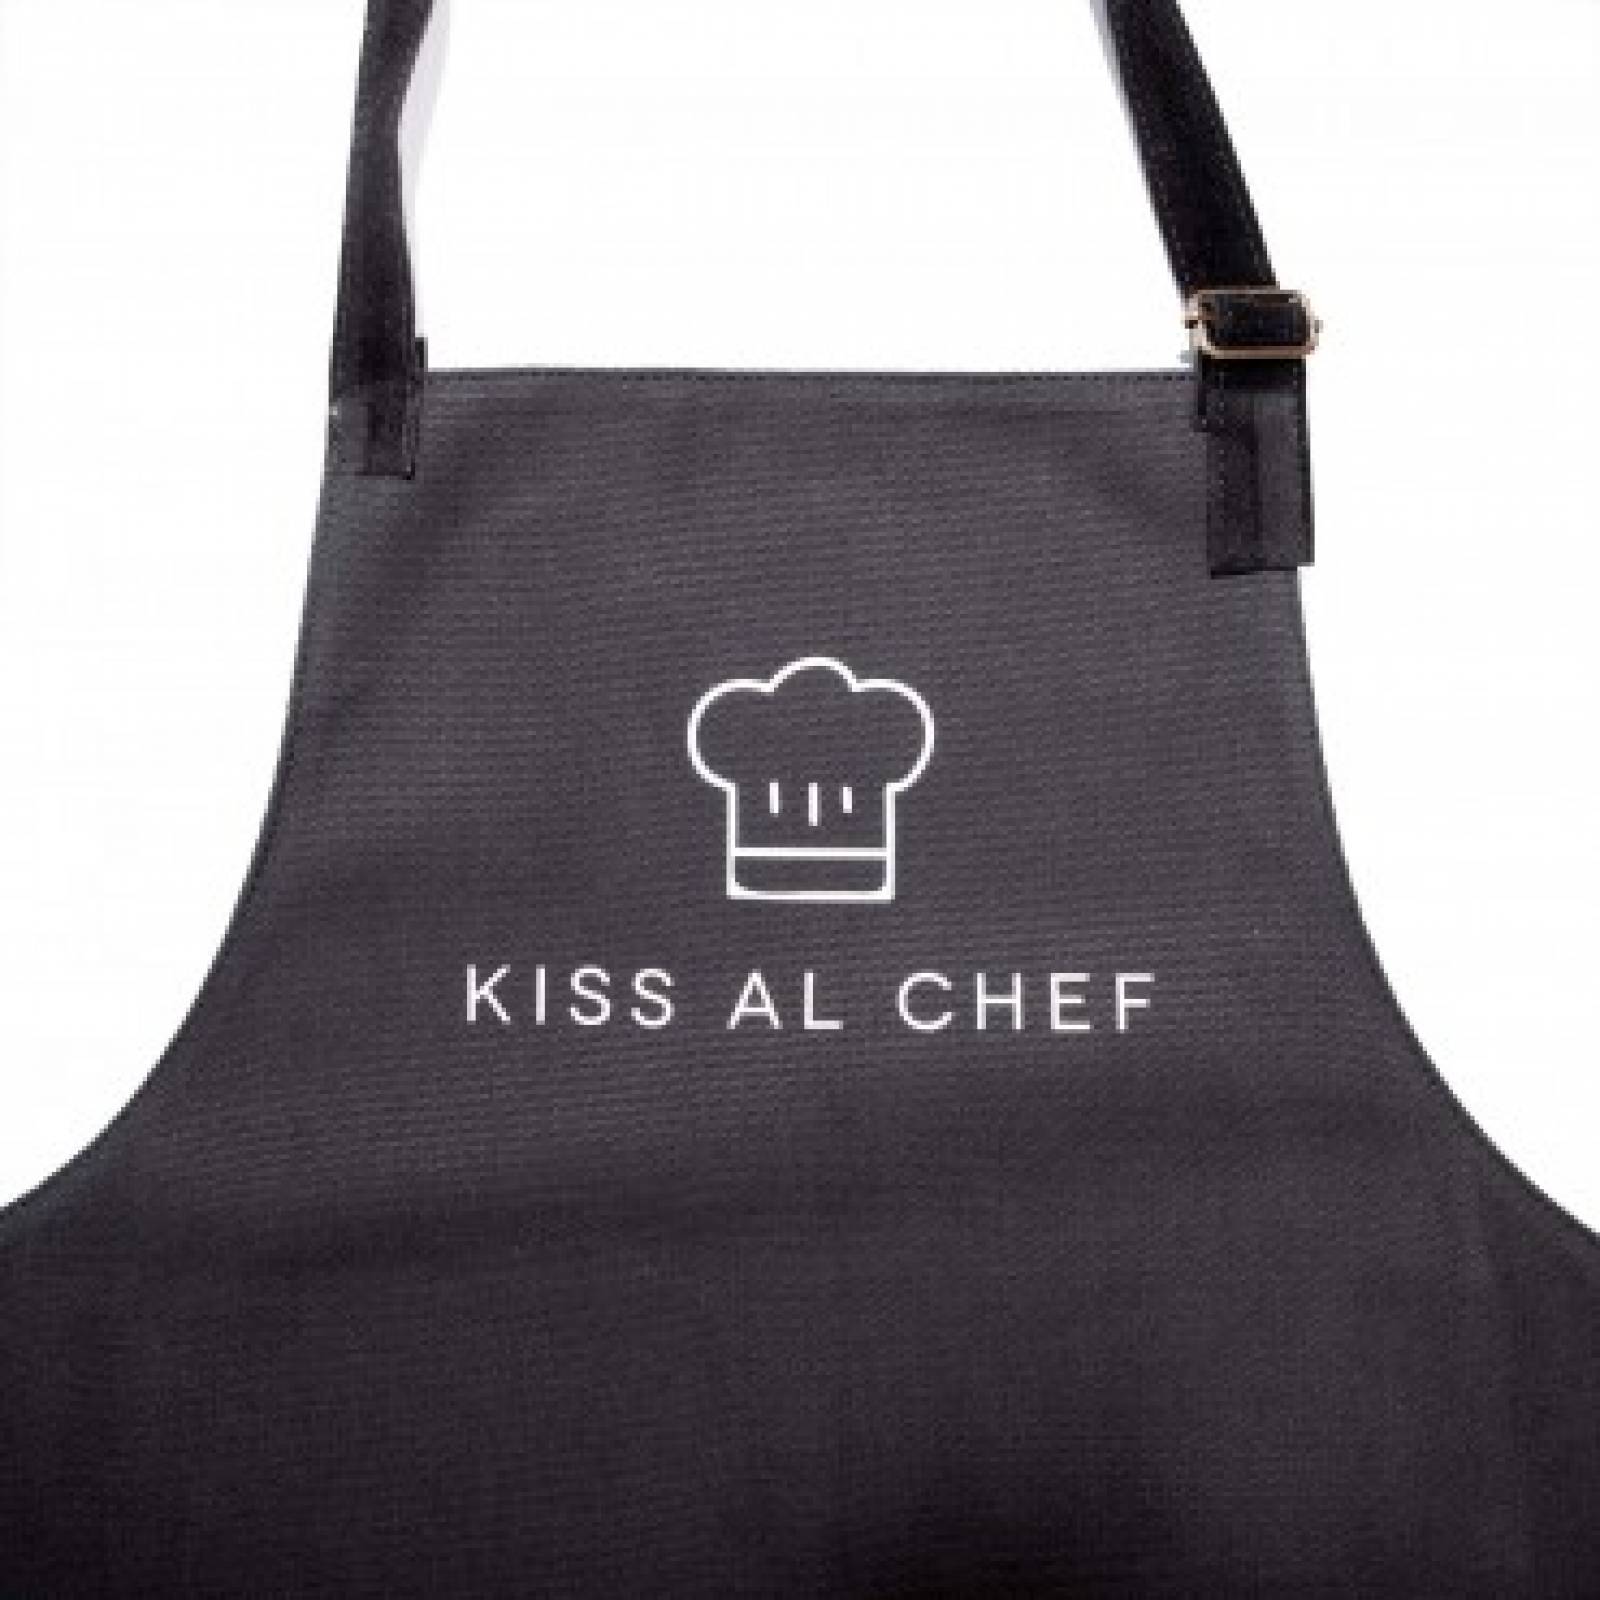 Mandil Kiss al Chef